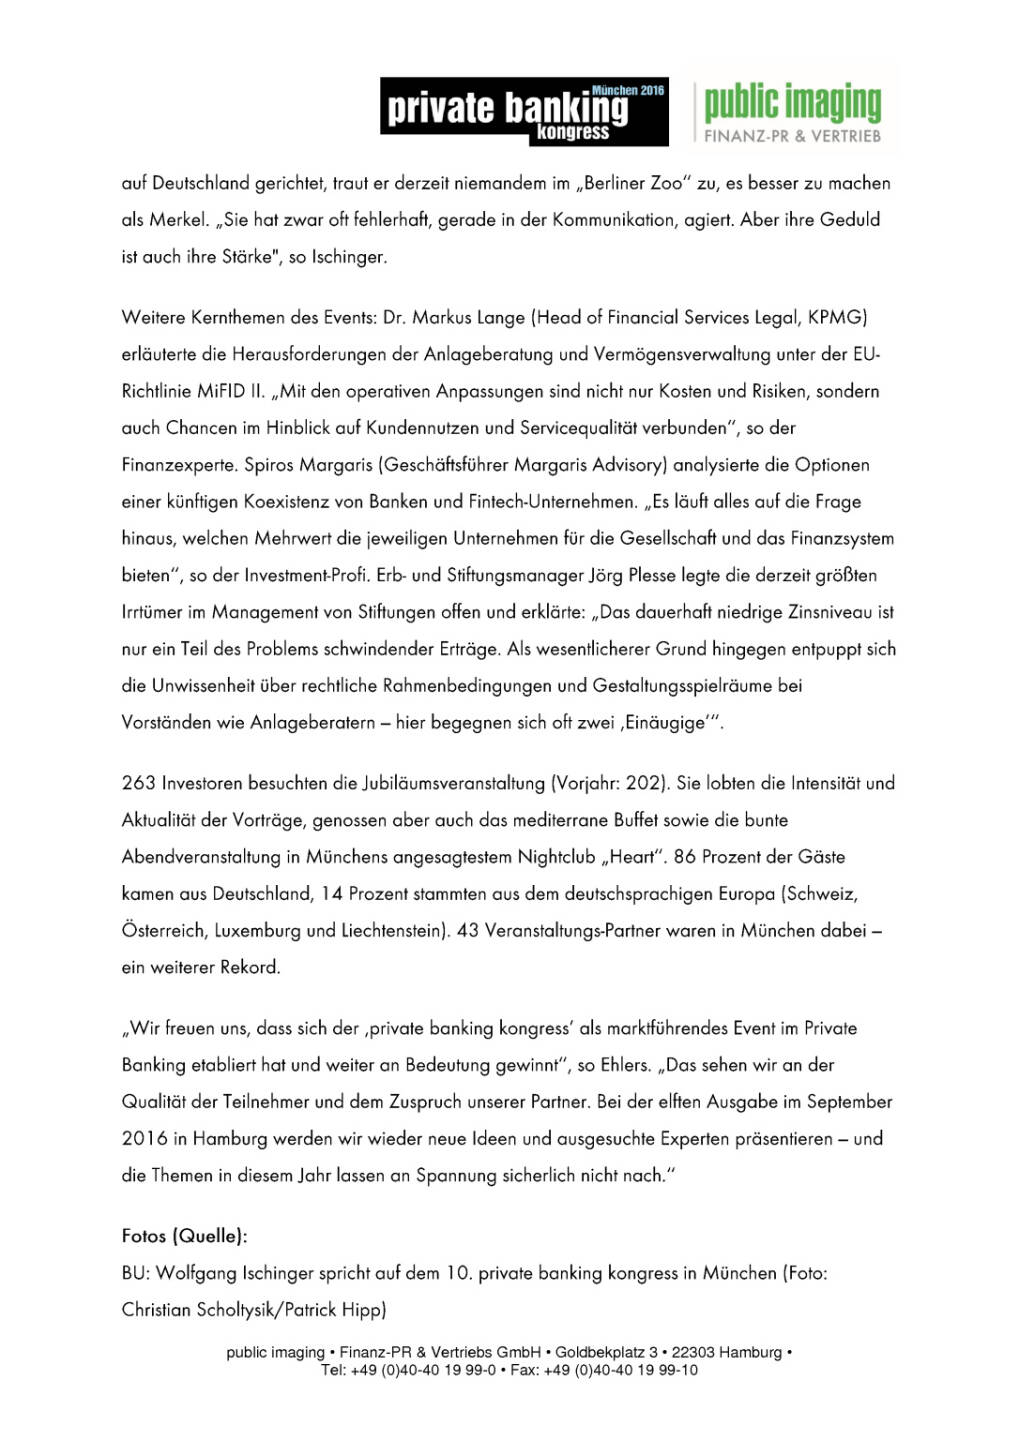 10. private banking kongress in München, Seite 3/4, komplettes Dokument unter http://boerse-social.com/static/uploads/file_979_10_private_banking_kongress_in_munchen.pdf